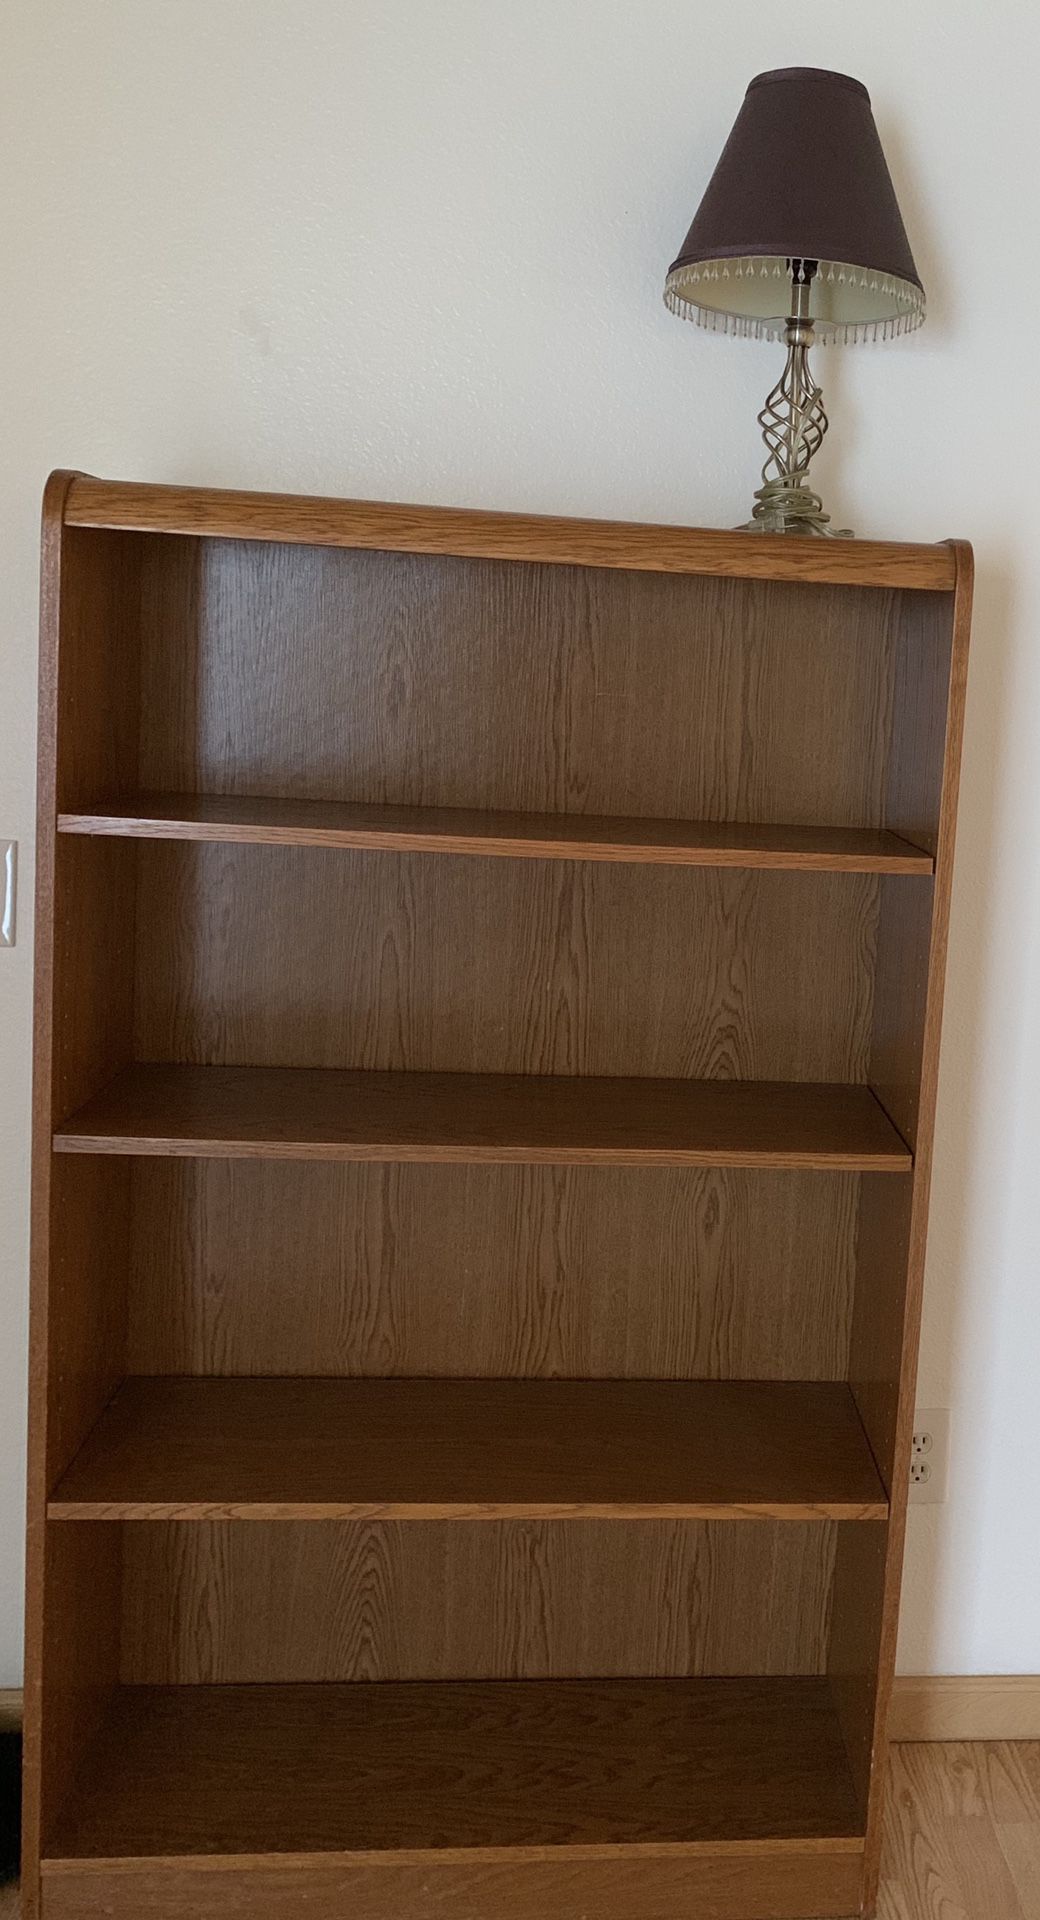 Free bookshelf and lamp